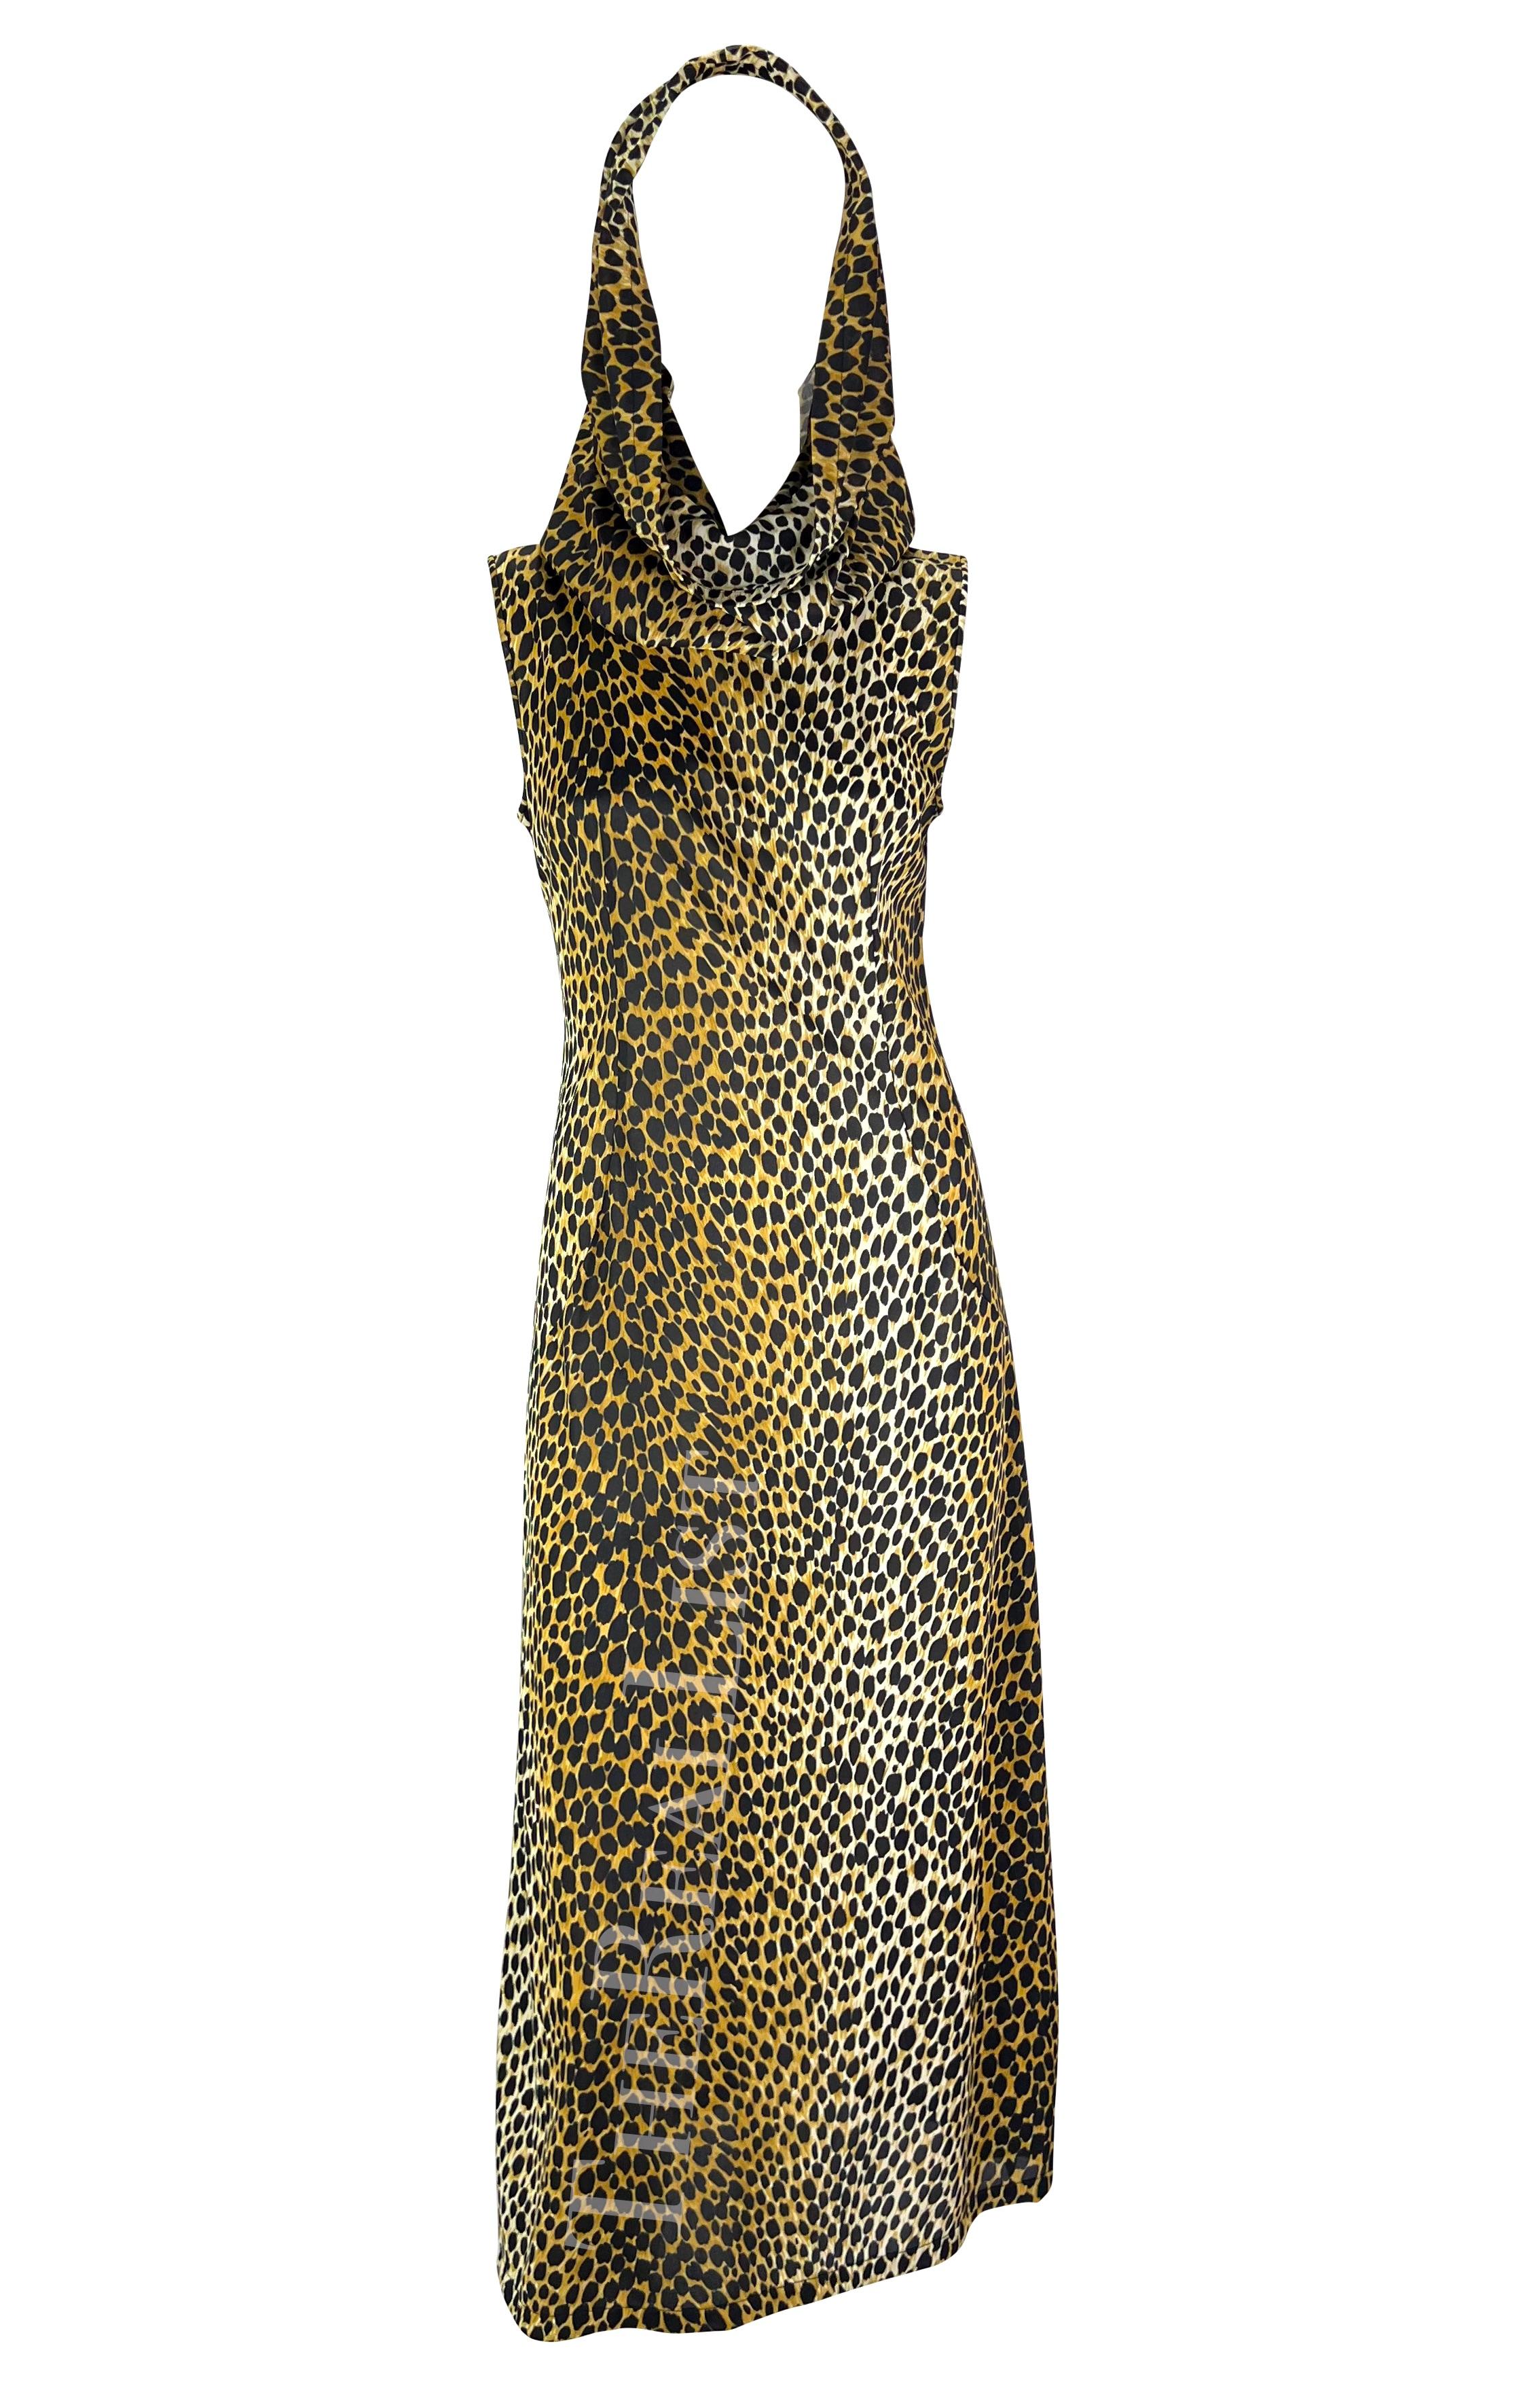 S/S 1996 Dolce & Gabbana Hooded Stretch Leopard Print Hit Slit Dress For Sale 3